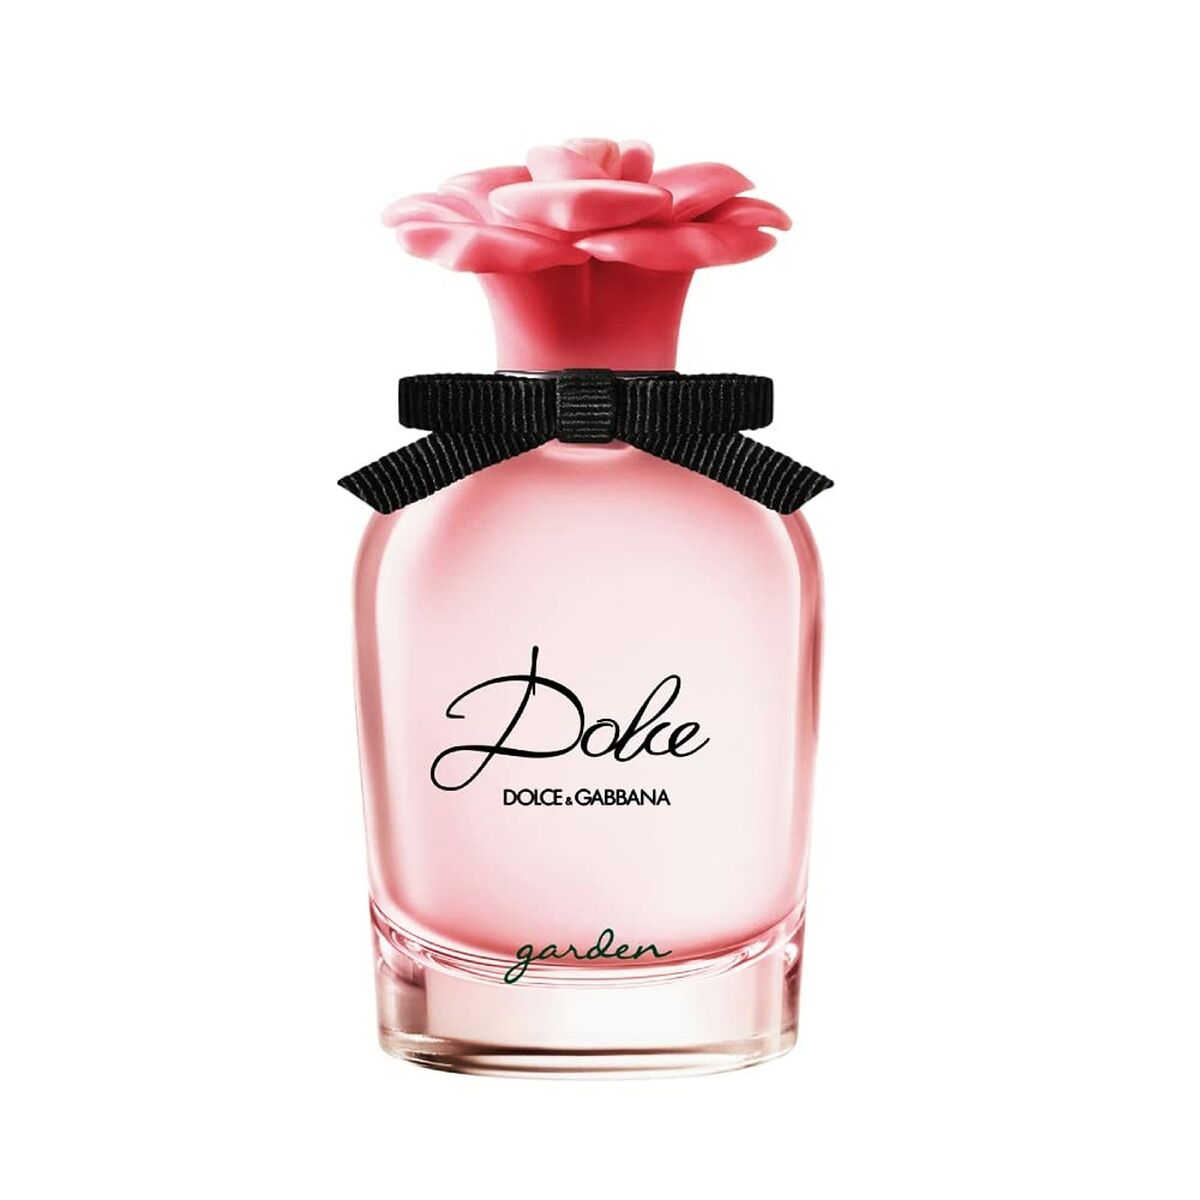 Parfum Femme Dolce & Gabbana EDP 75 ml Dolce Garden